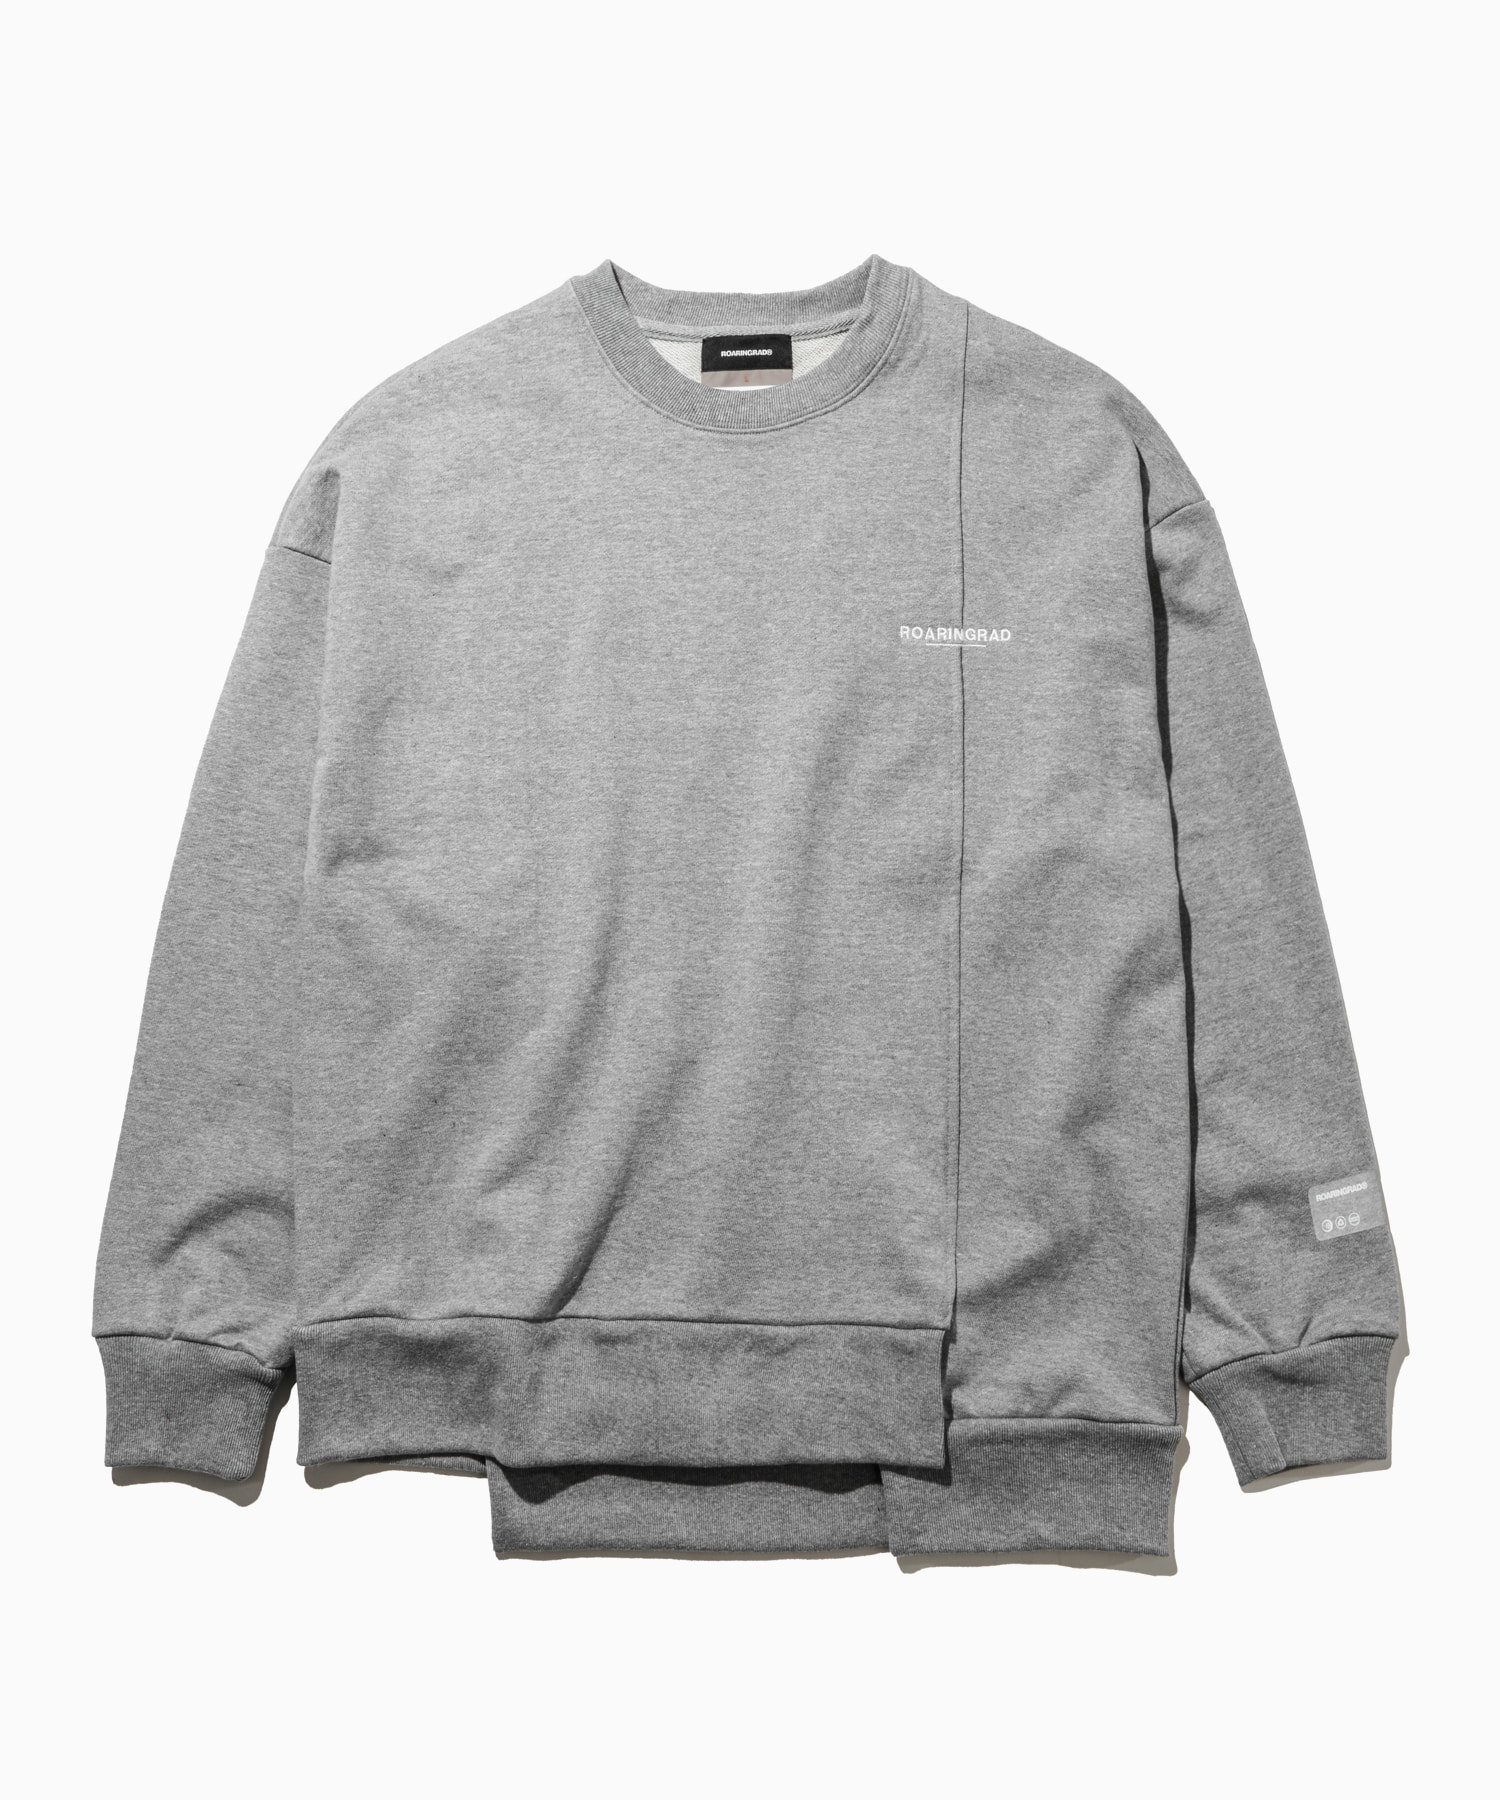 asymmetric sweat shirt gray - 로어링라드(ROARINGRAD)